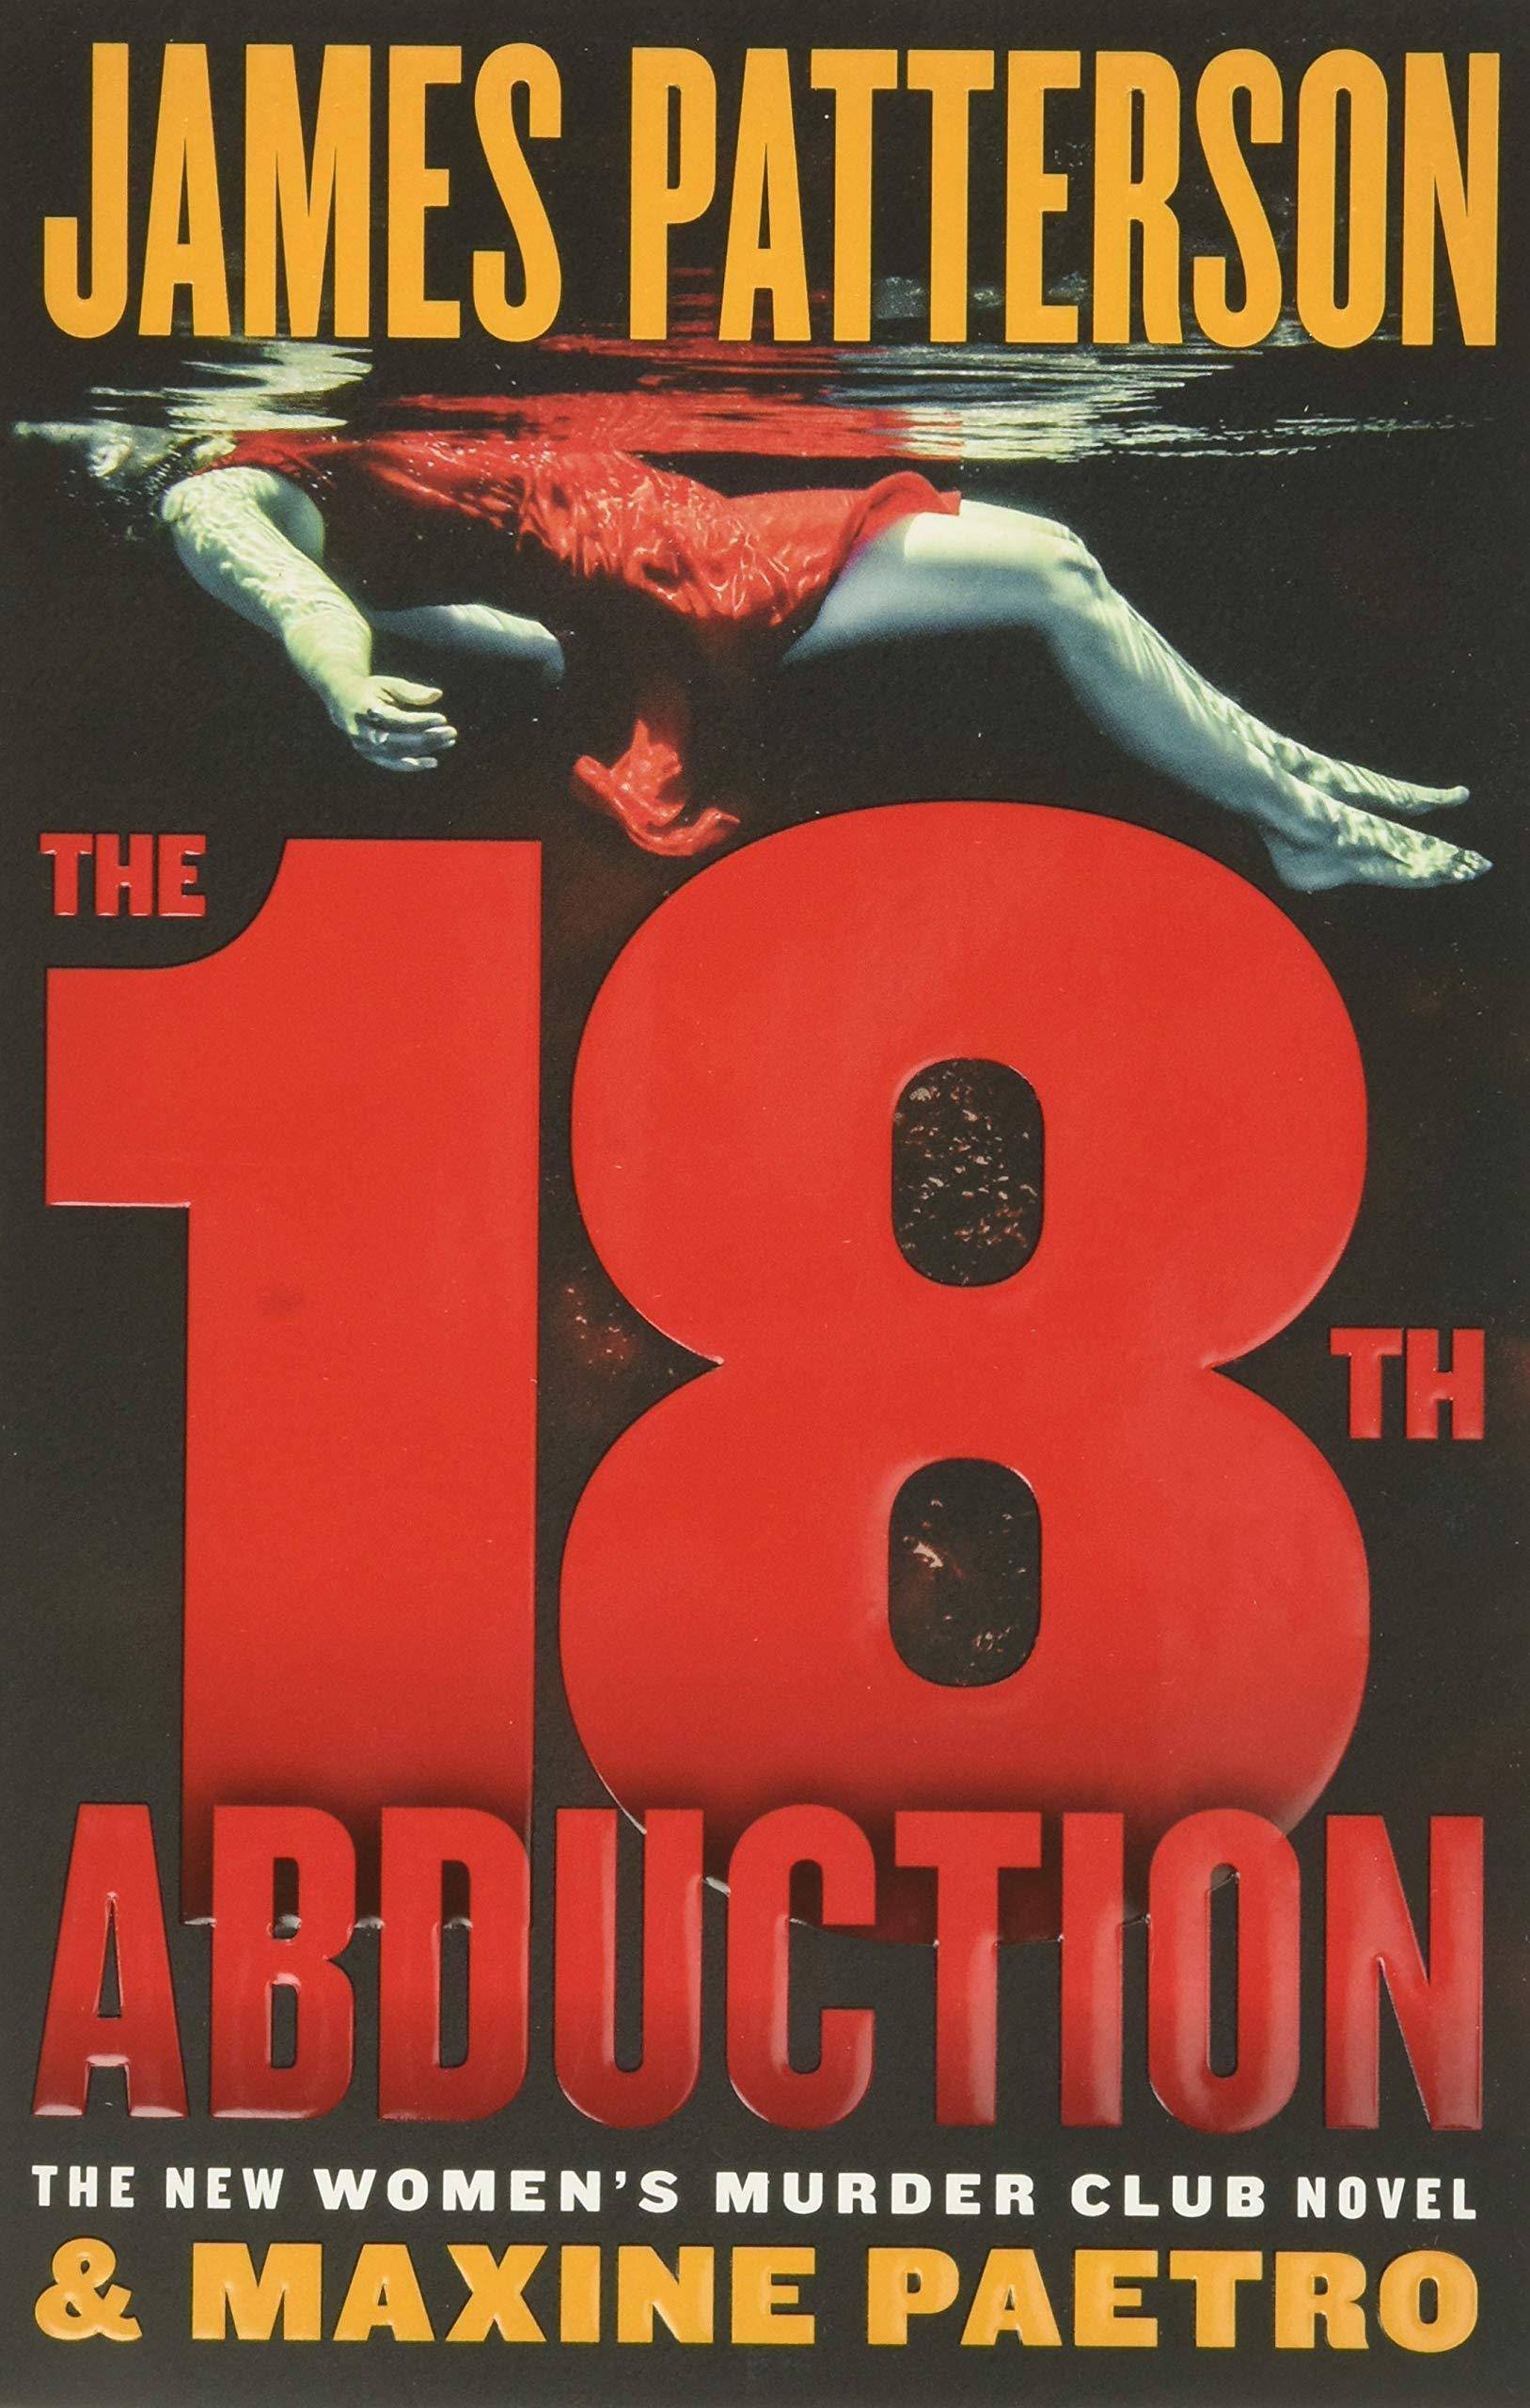 18th Abduction - SureShot Books Publishing LLC